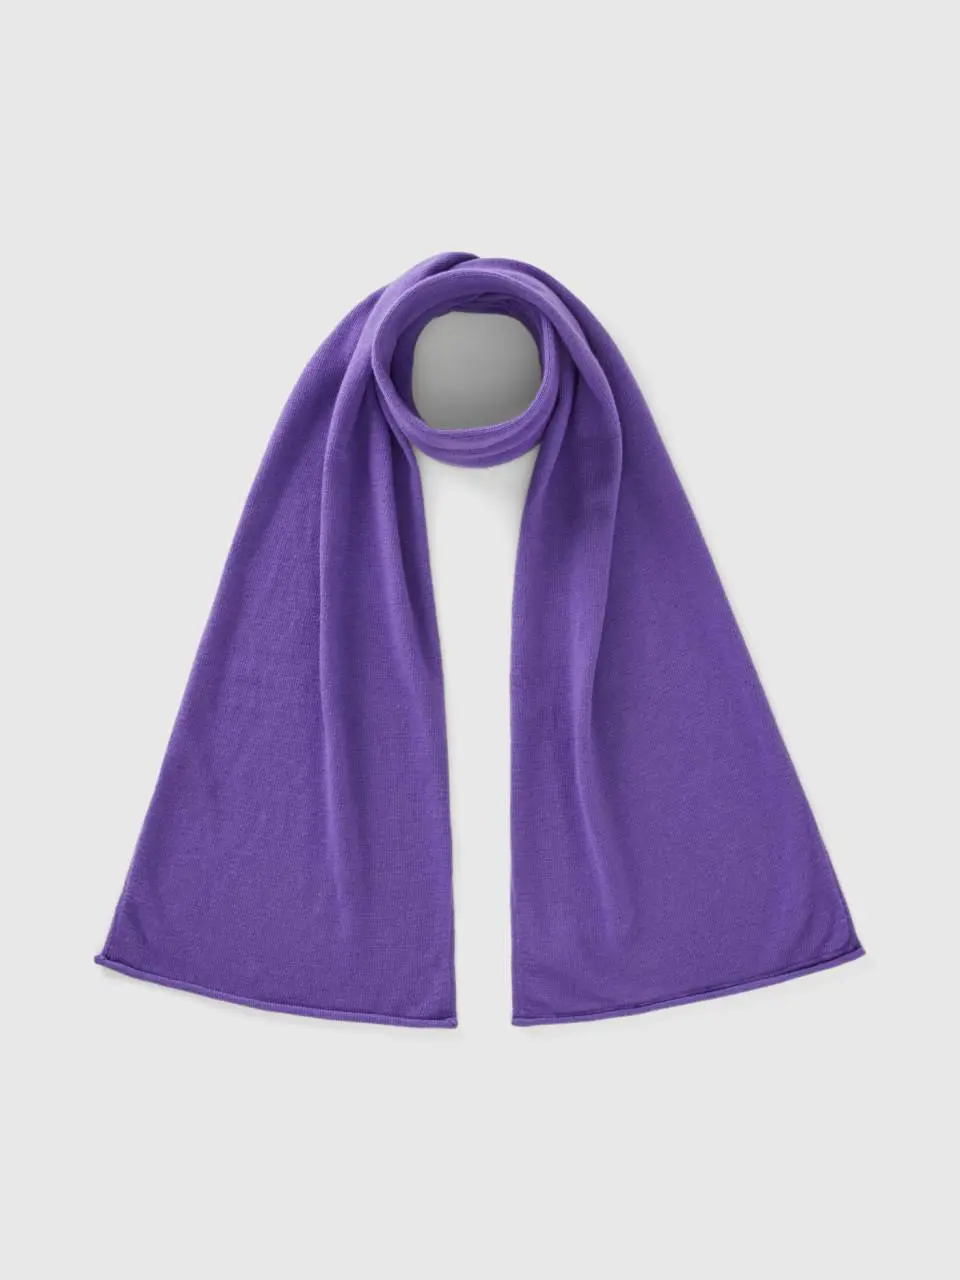 Benetton purple cashmere blend scarf. 1